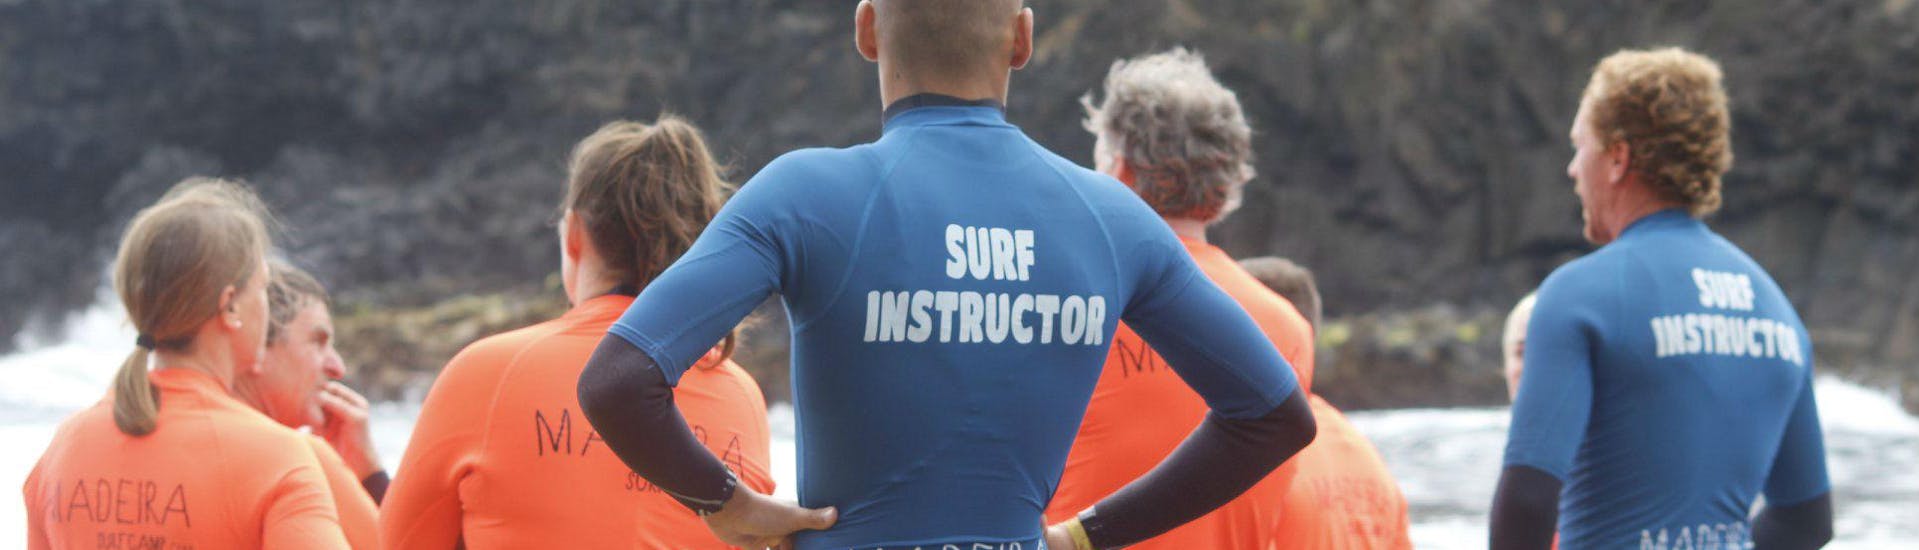 Lezioni di surf da 7 anni per tutti i livelli.